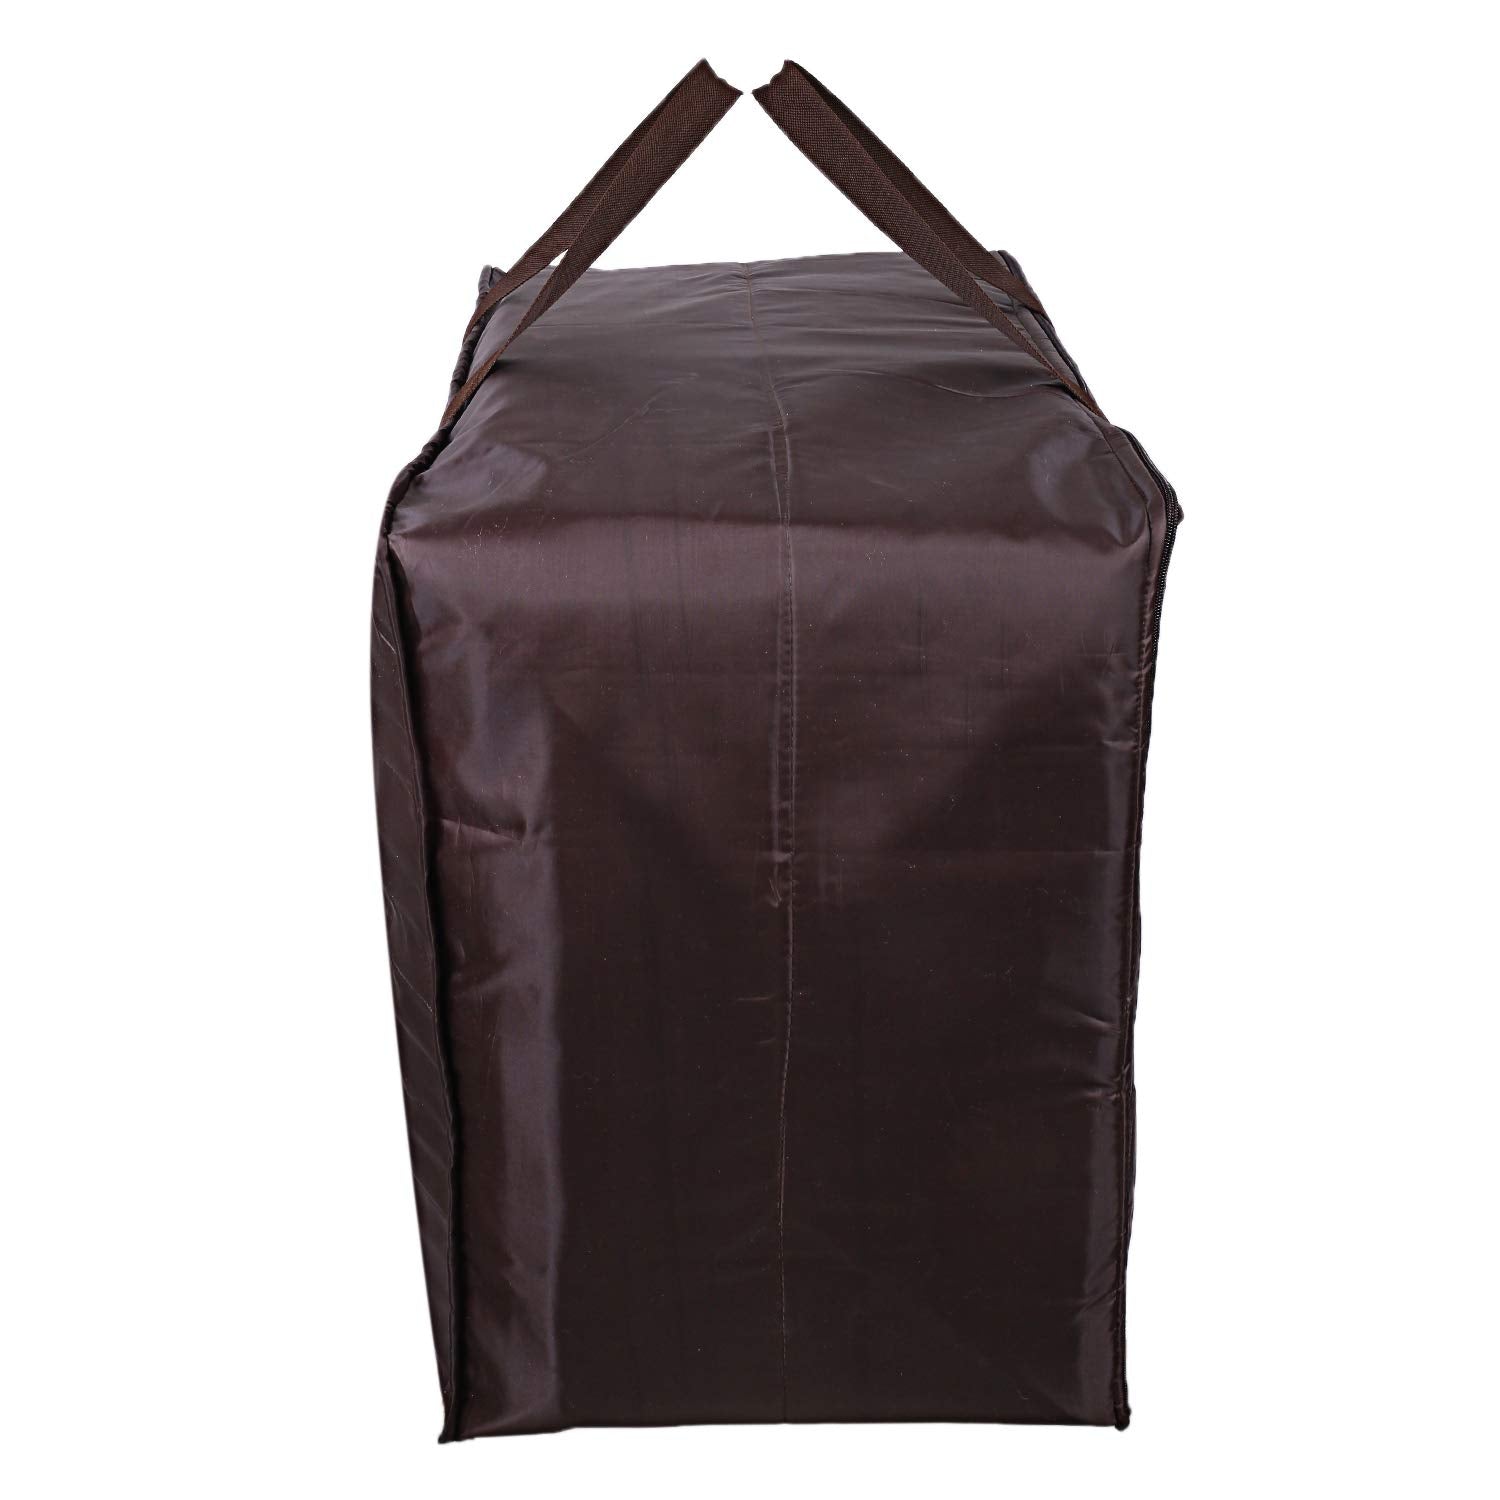 Kuber Industries Rectangular Parachute Jumbo Under Bed Moisture Proof Storage Bag with Zipper Closure and Handle (Brown)